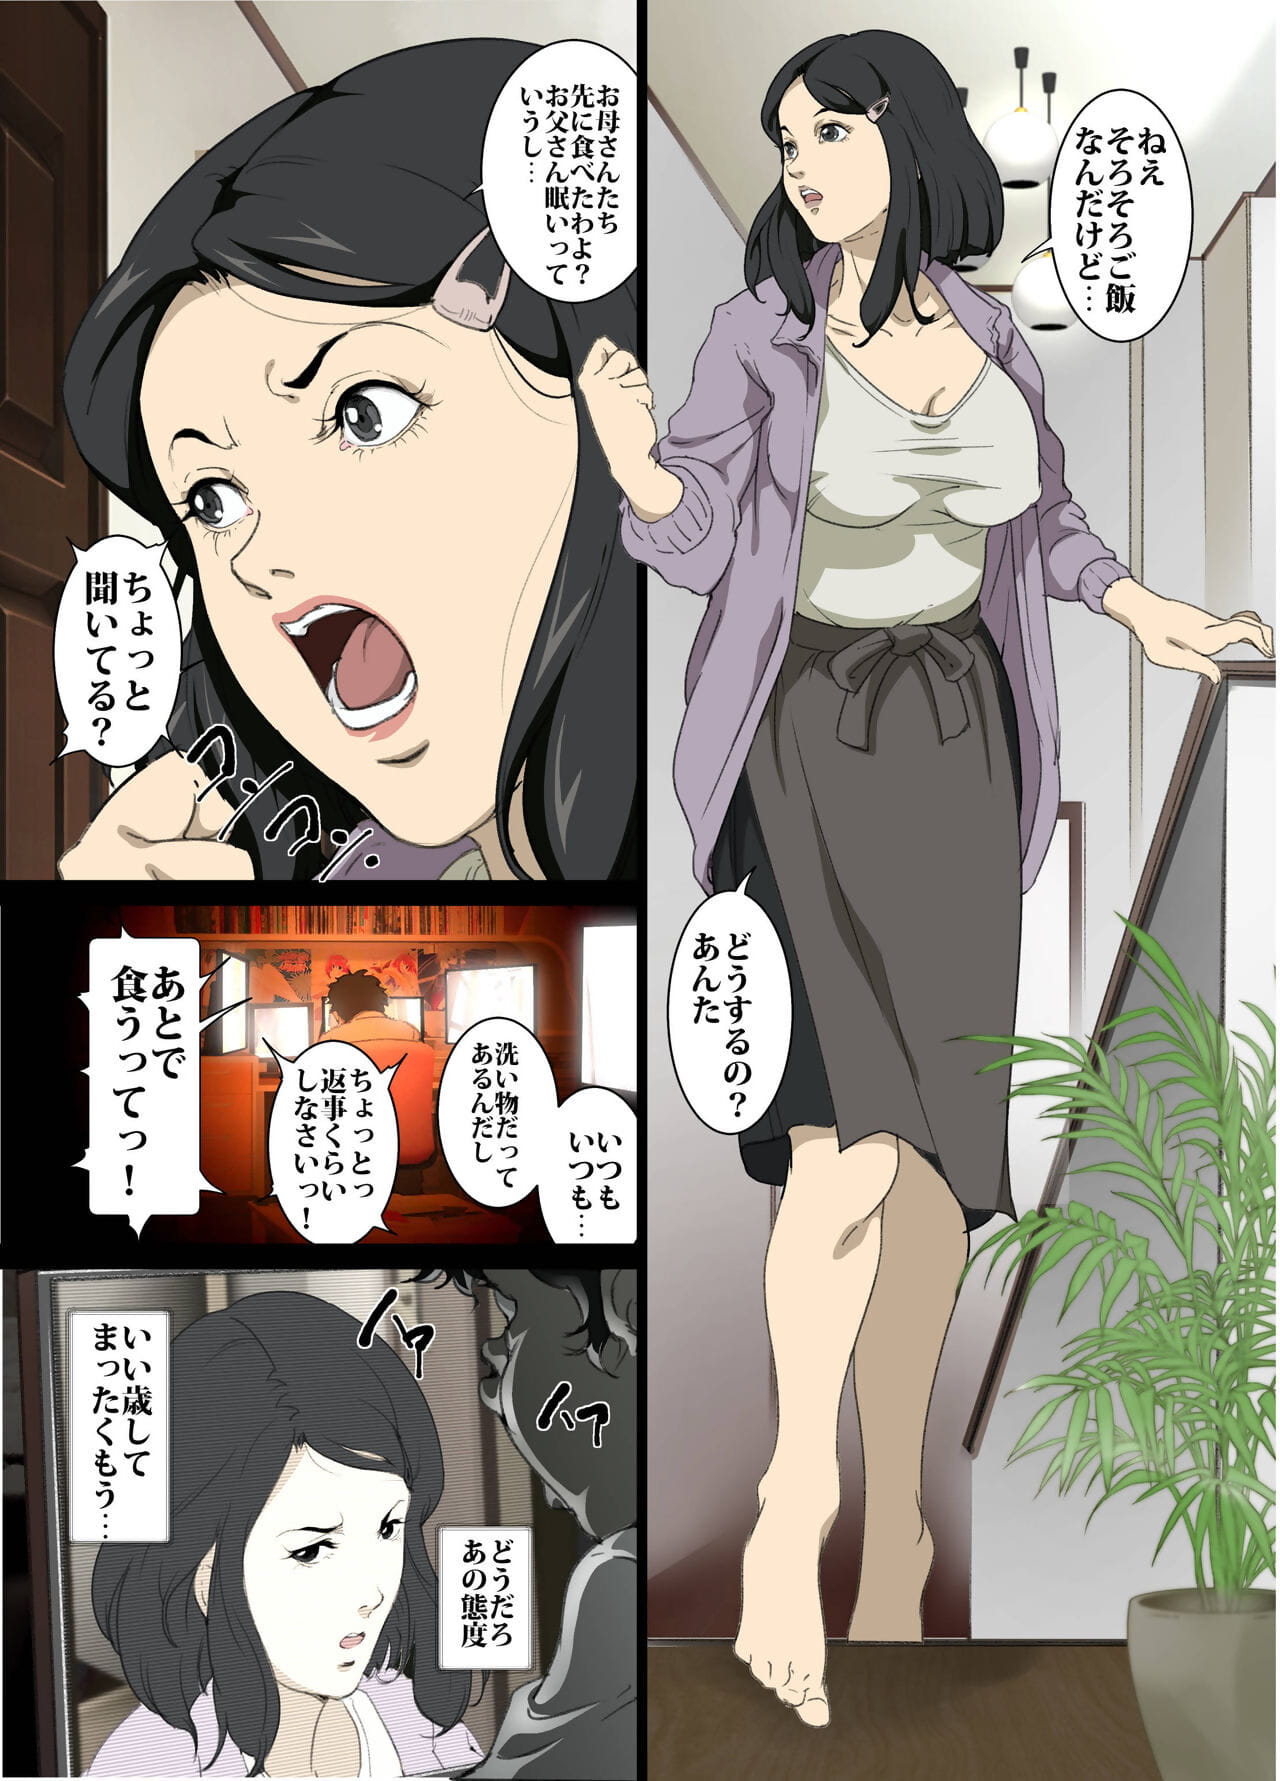 namaiki นา hahaoya โอ honnin ดี โม kizukarezu ดี minkan suru houhou page 1